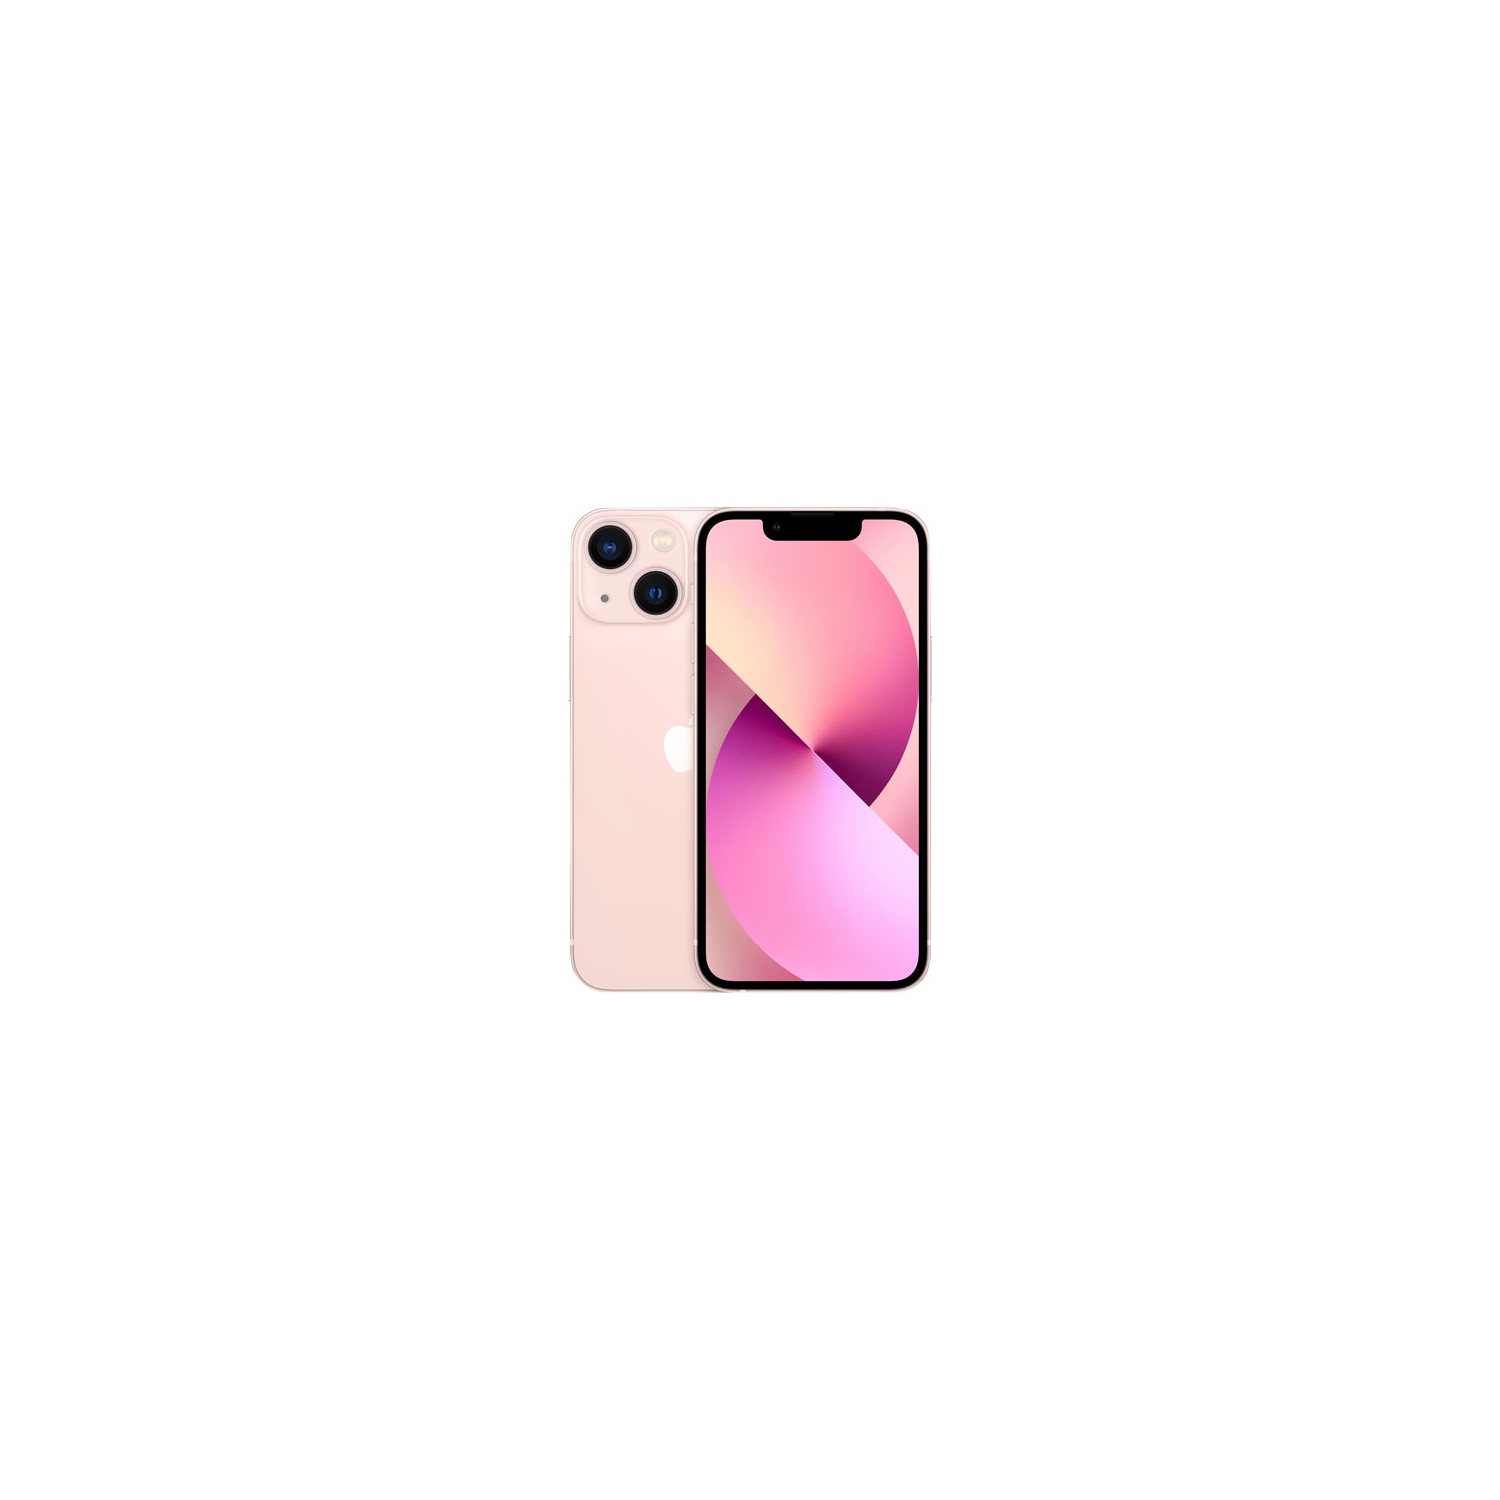 Apple iPhone 13 mini 256GB - Pink - Unlocked - Refurbished